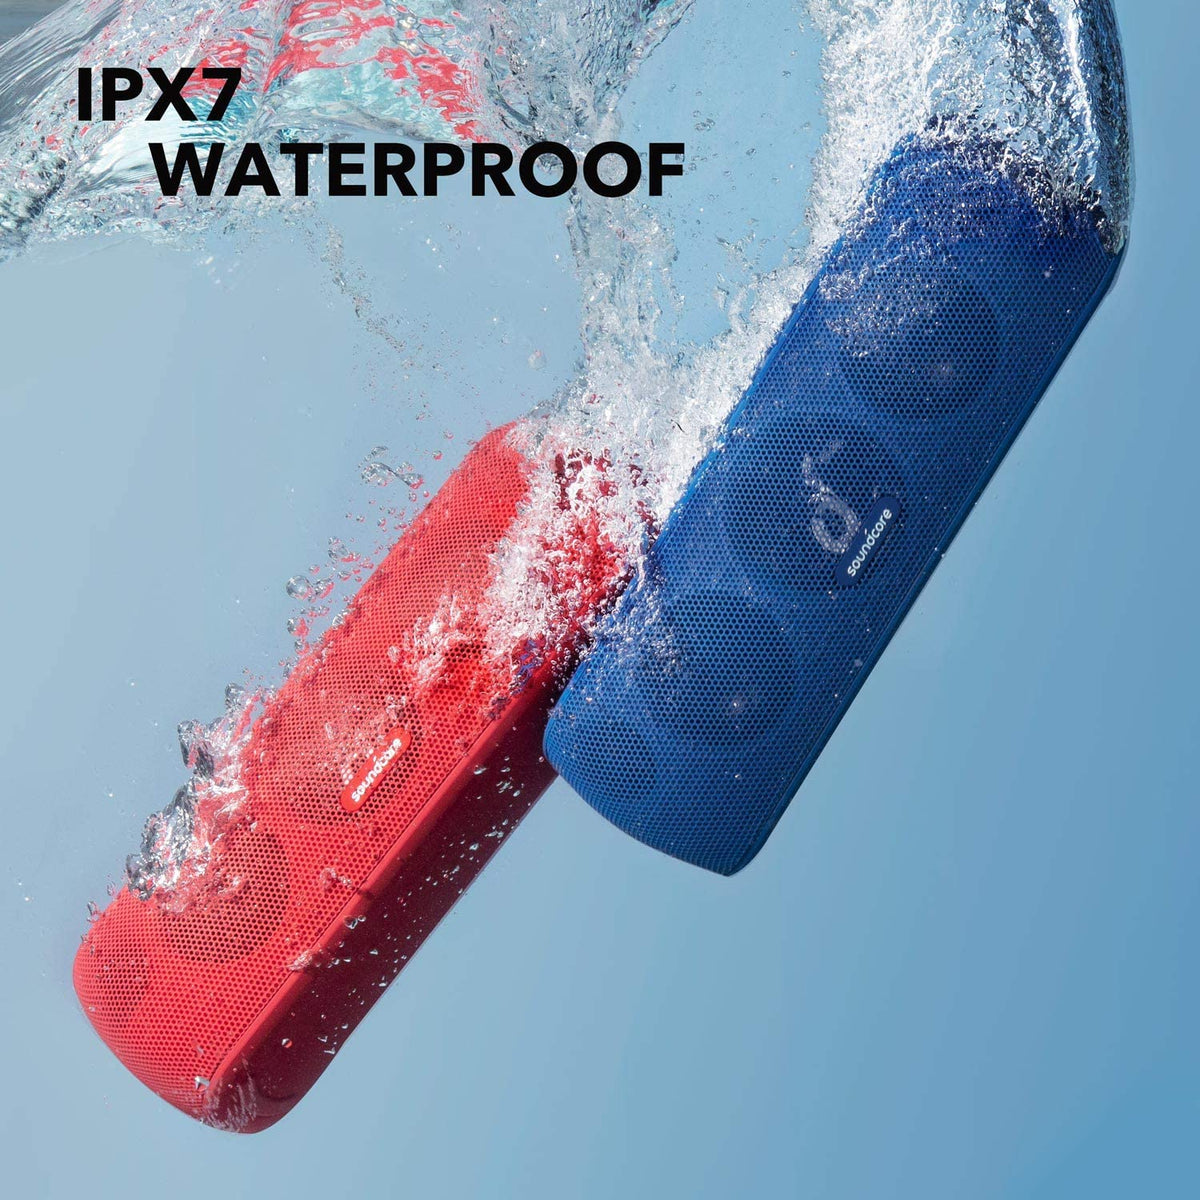 IPX7 waterproof soundcore bluetooth speaker